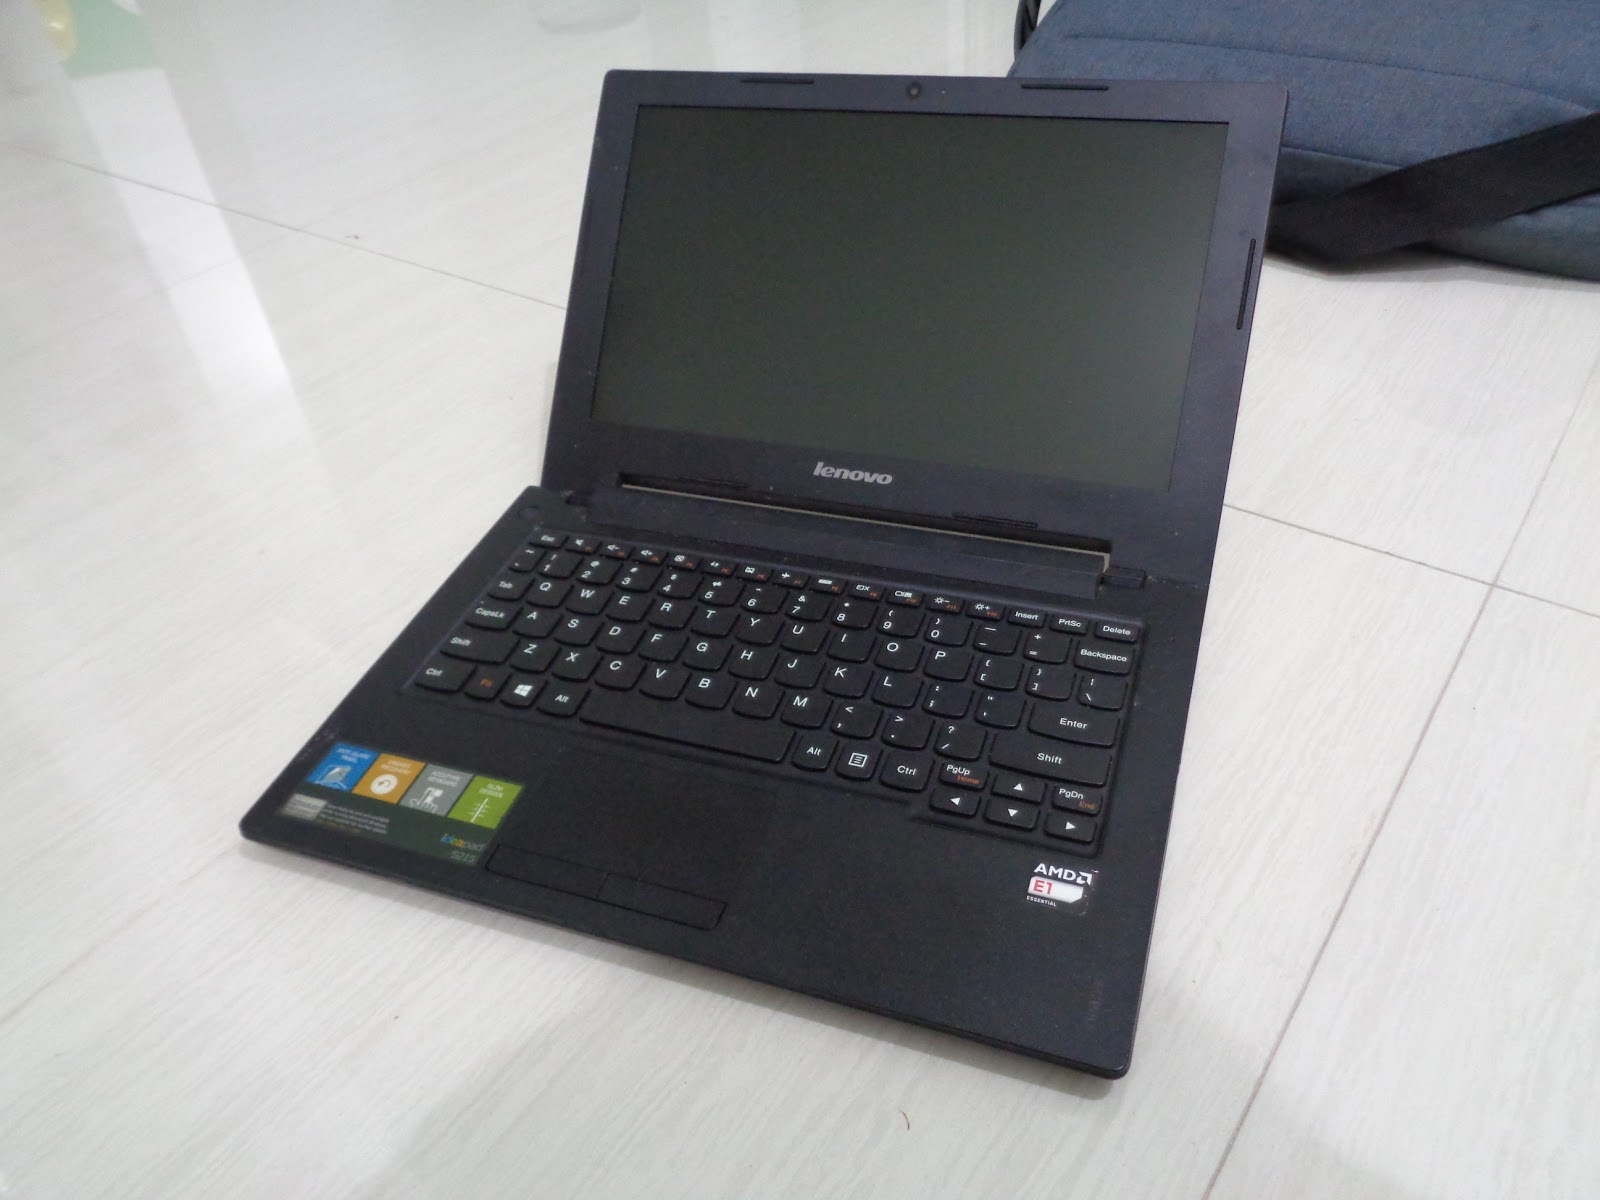 Lenovo Ideapad S215 AMD E1-2100 1,0Ghz : Laptop Bekas 